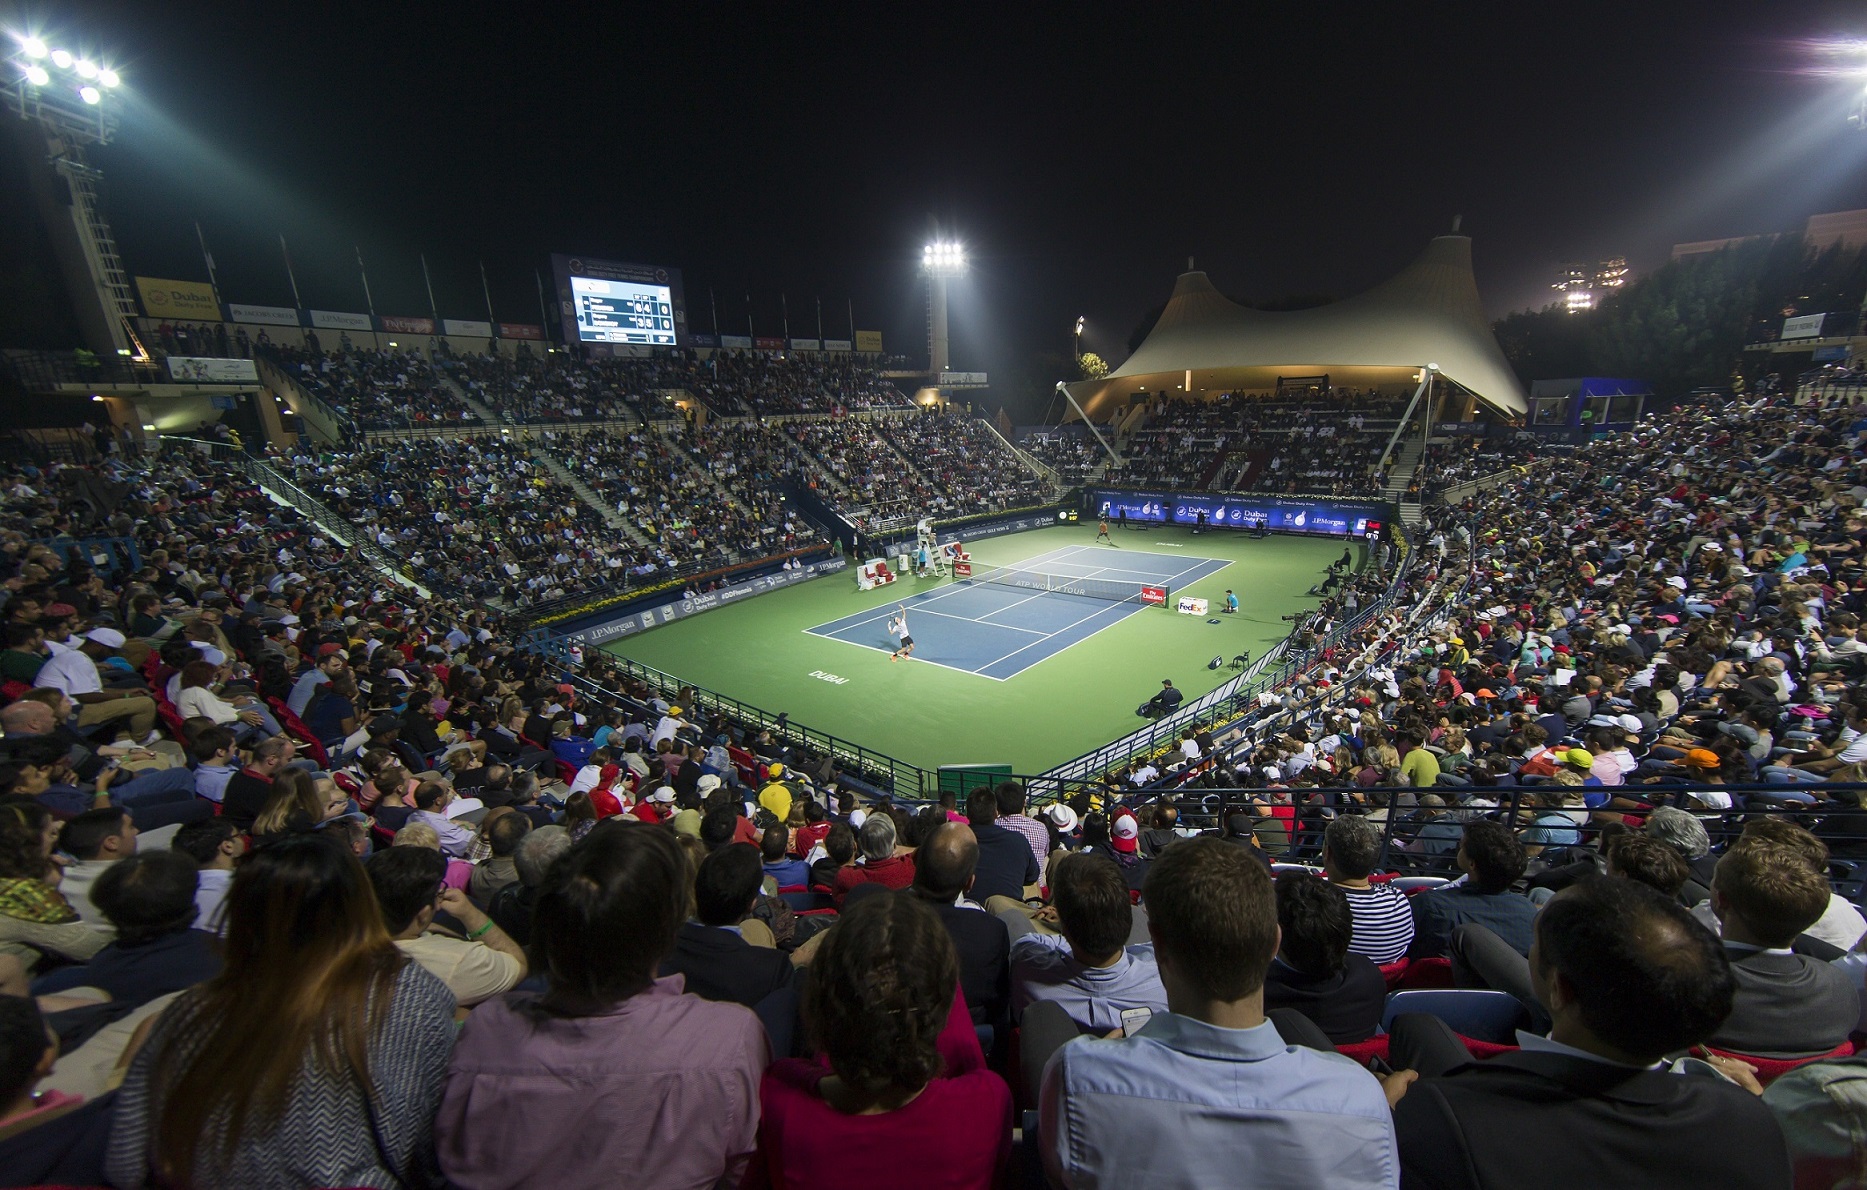 Draw confirmed for 2023 Dubai Duty Free Tennis Championships